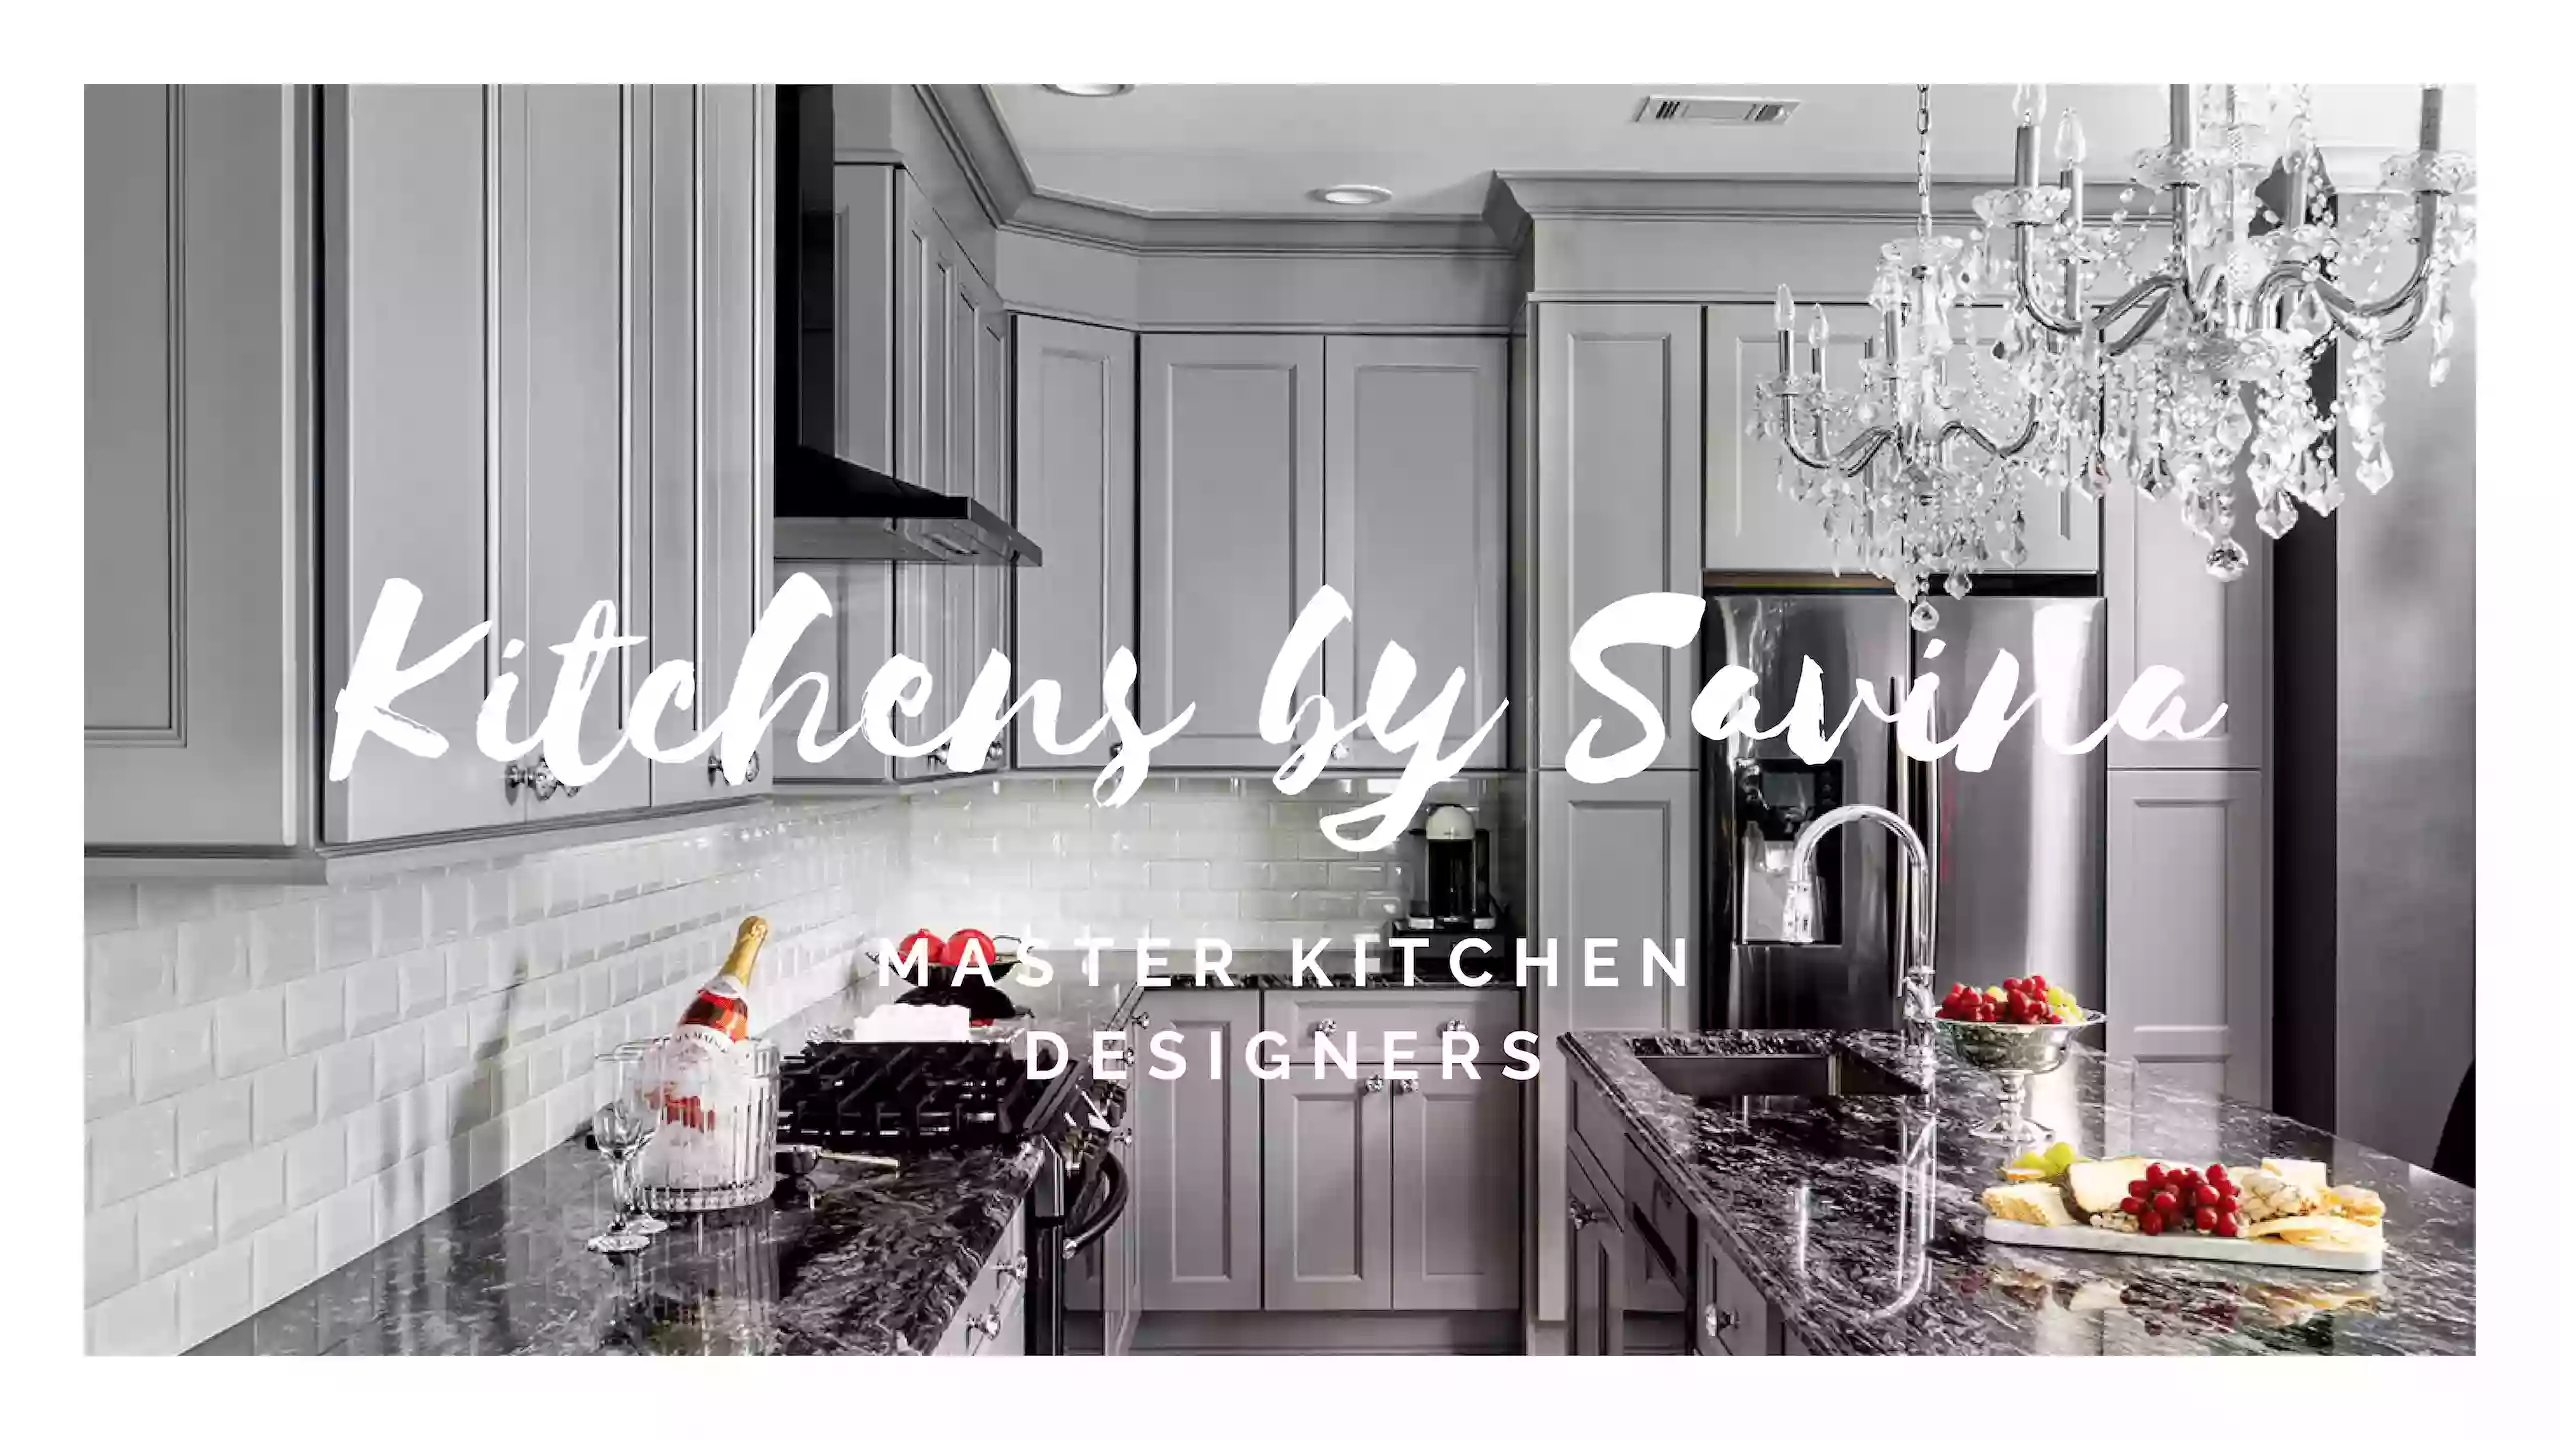 Kitchens by Savina